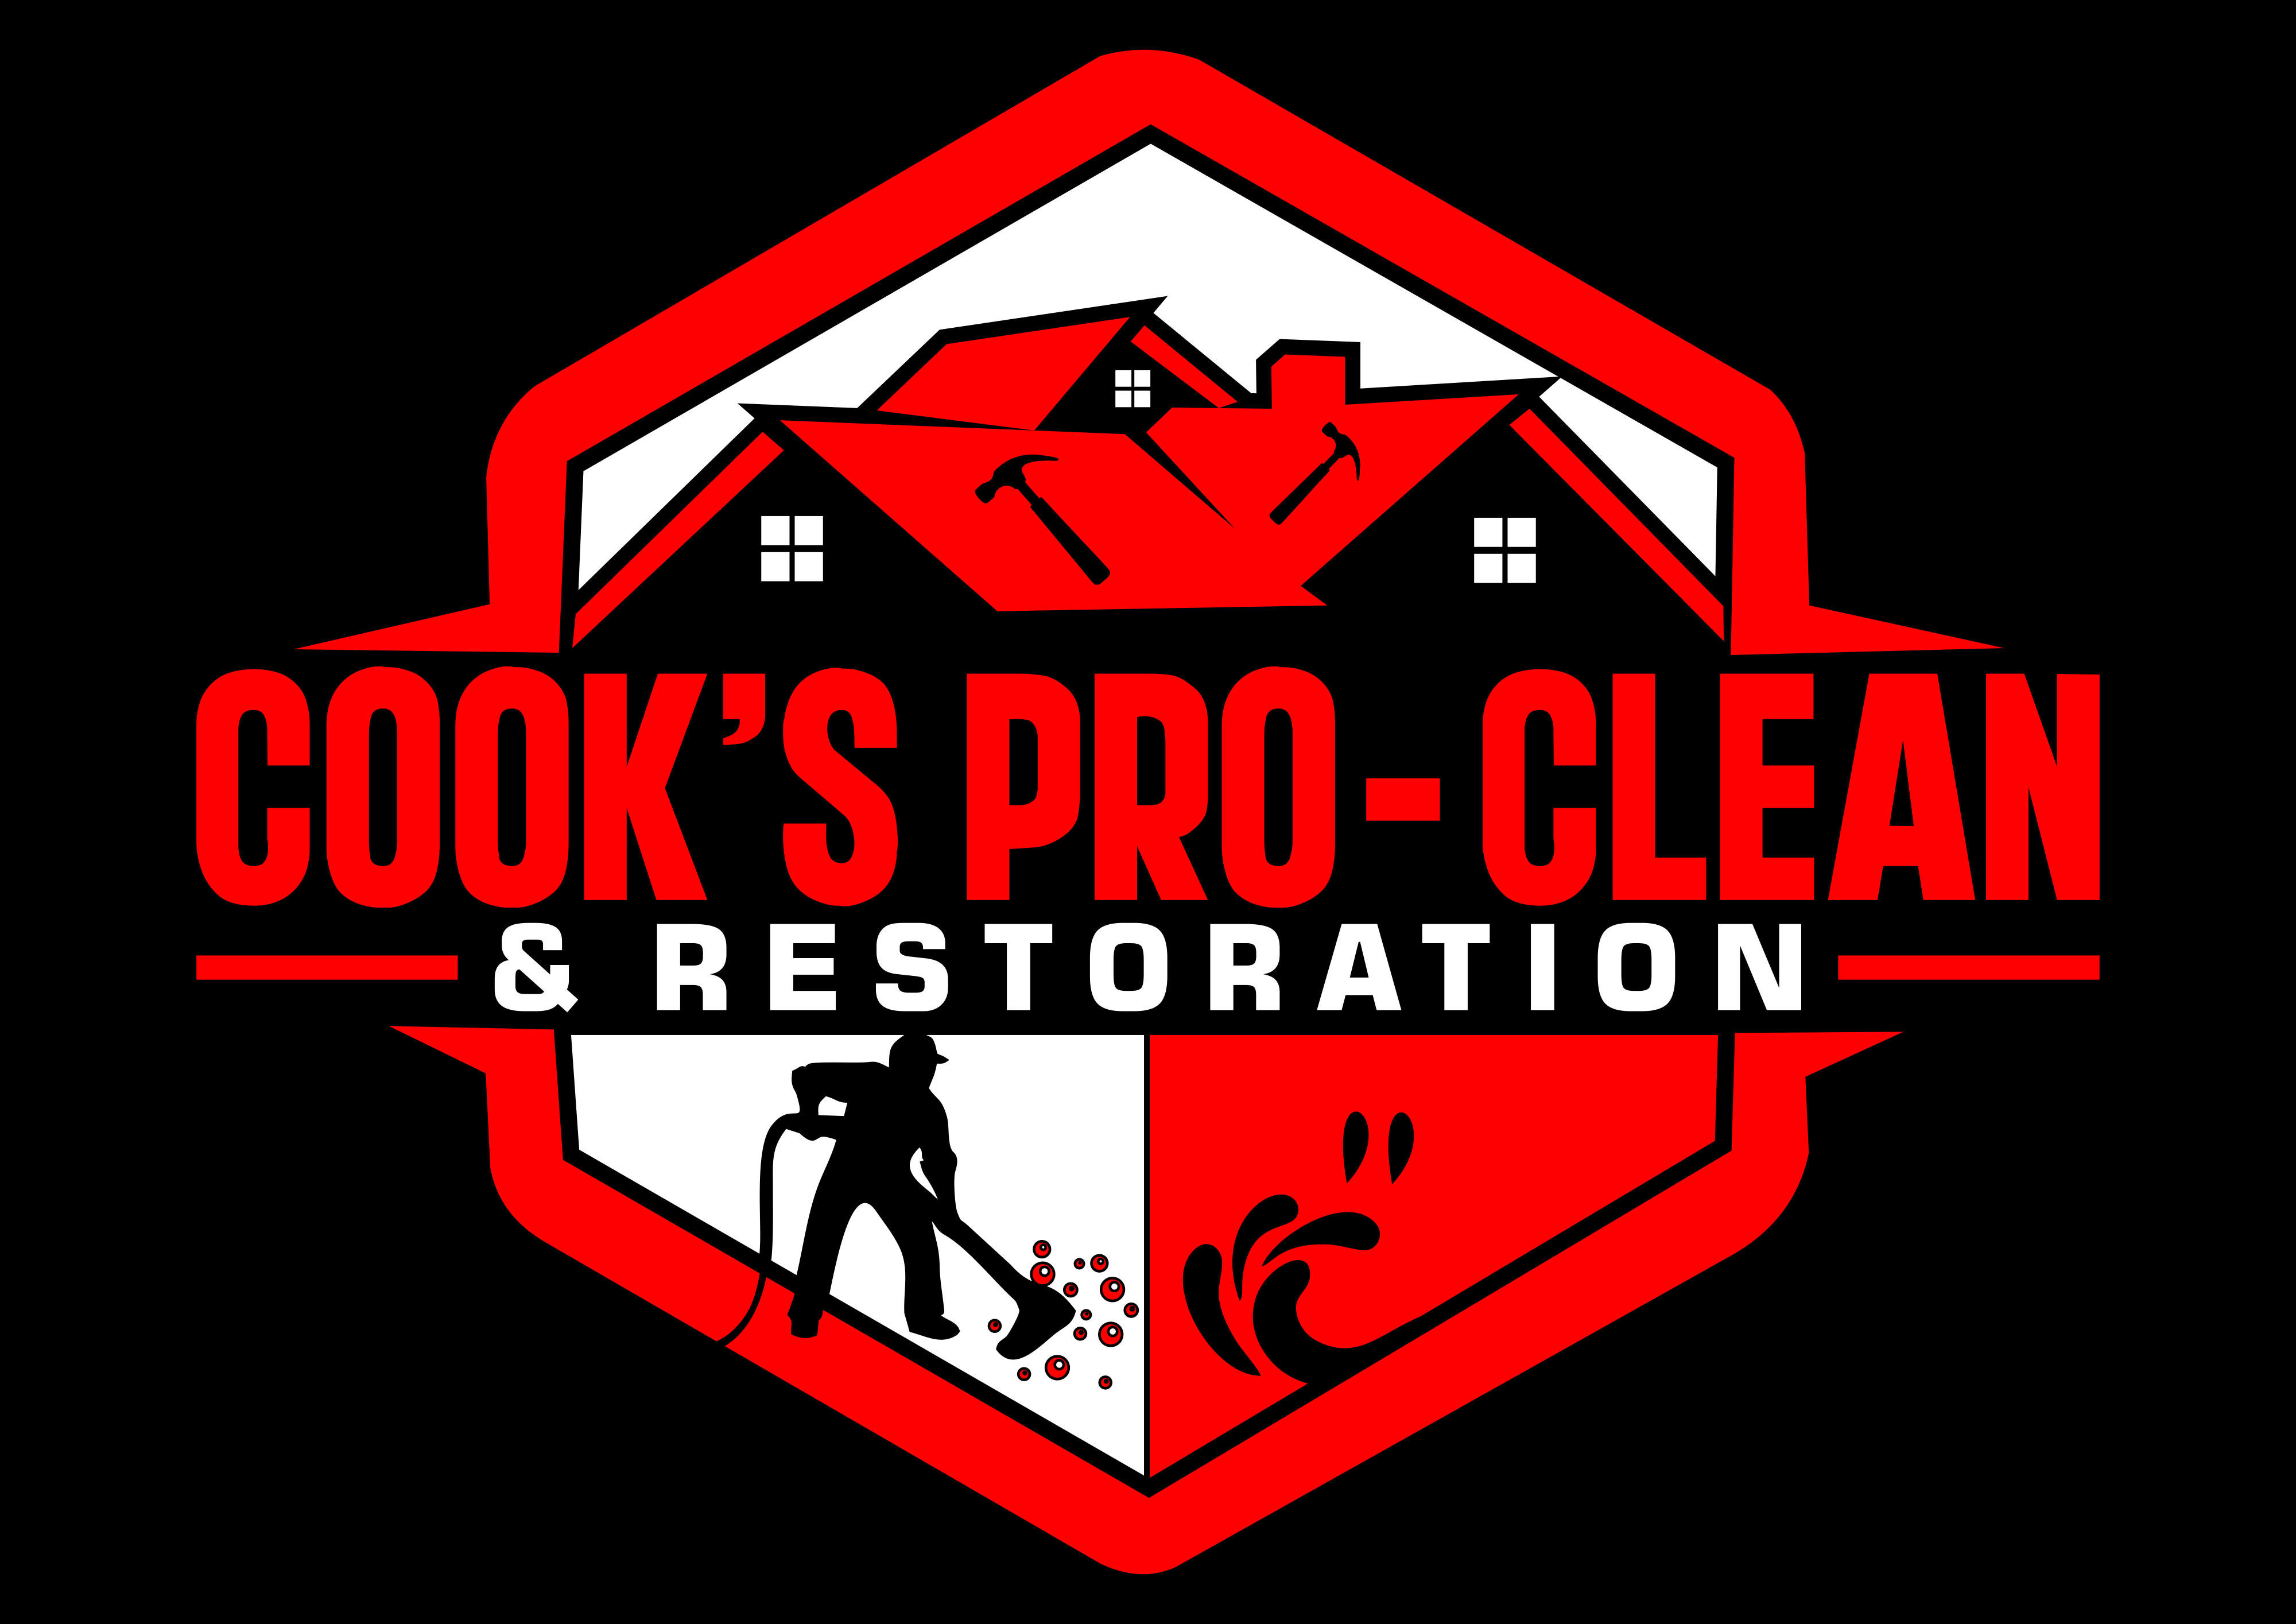 Cook's Pro-Clean & Restoration Services